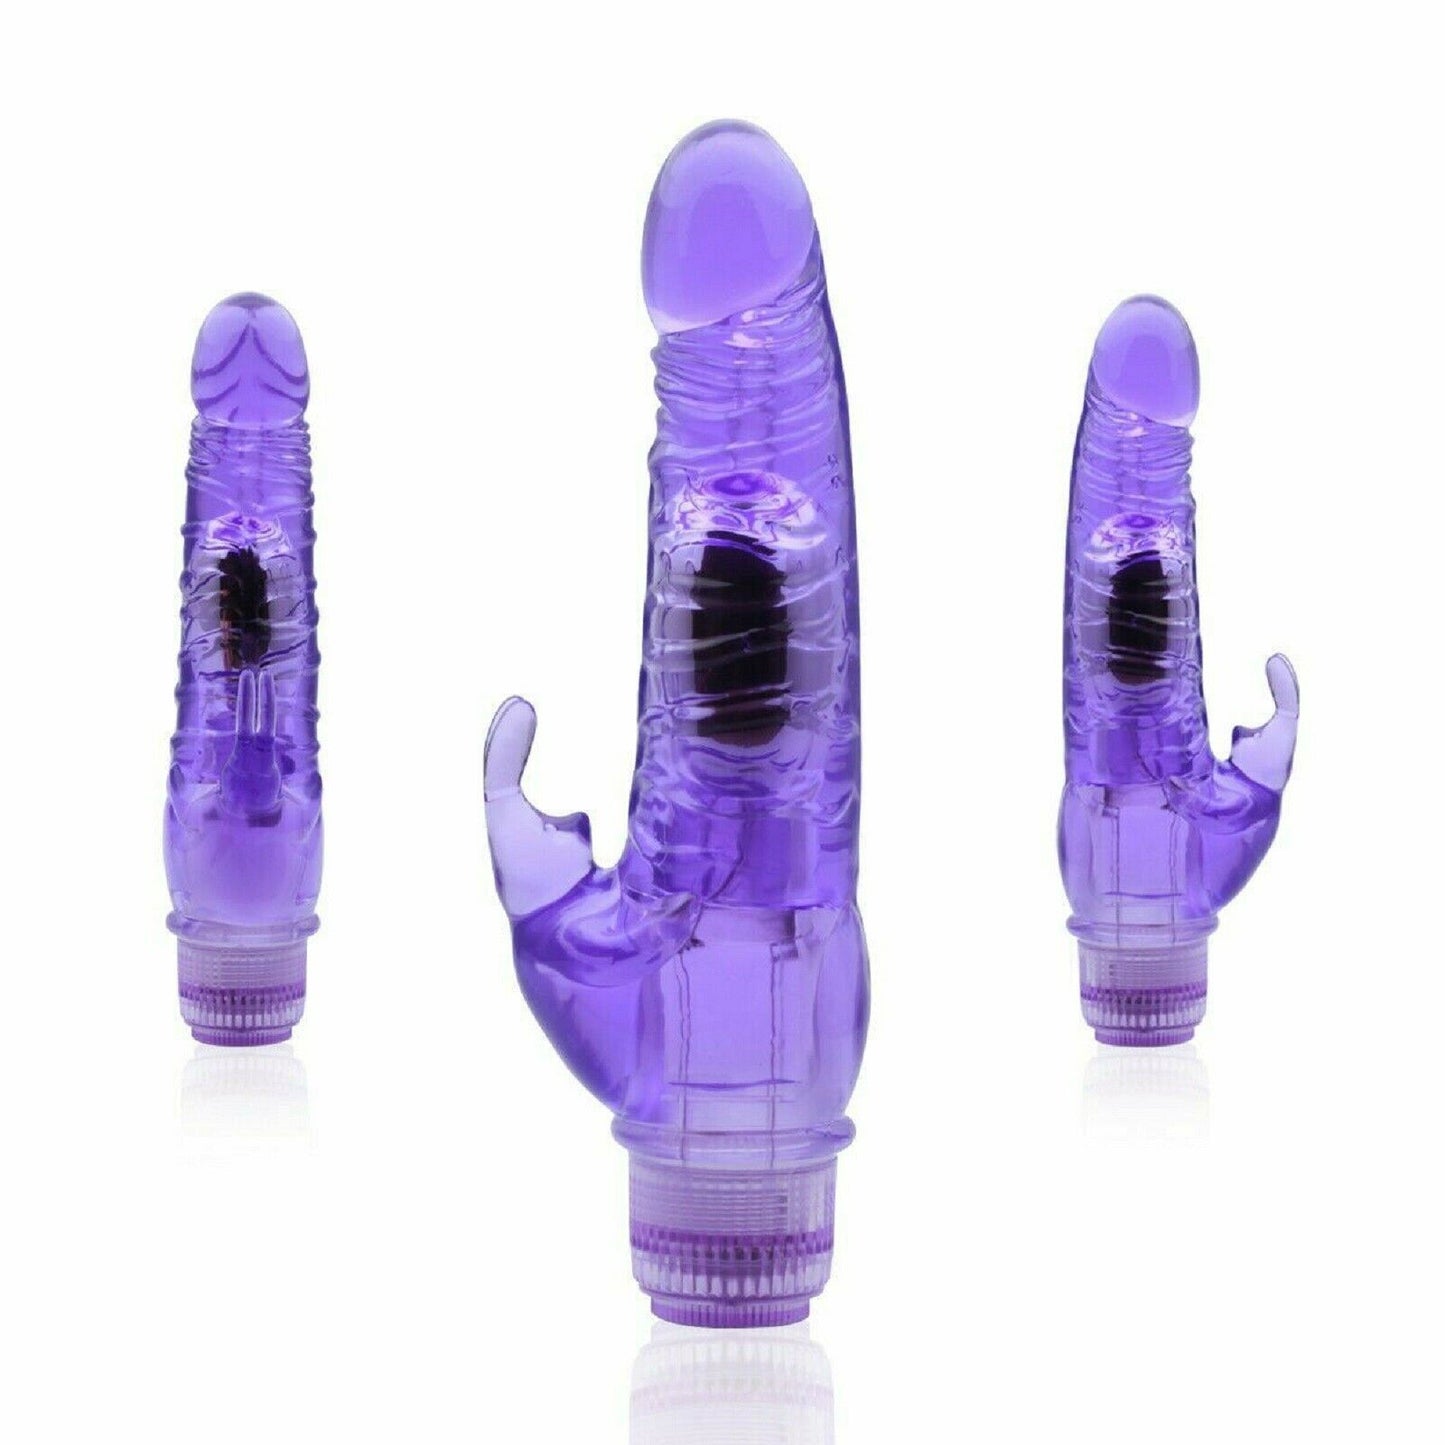 Large Rabbit Vibrator Big Realistic Dildo Clit G-spot Female Wand G Spot Sex Toy